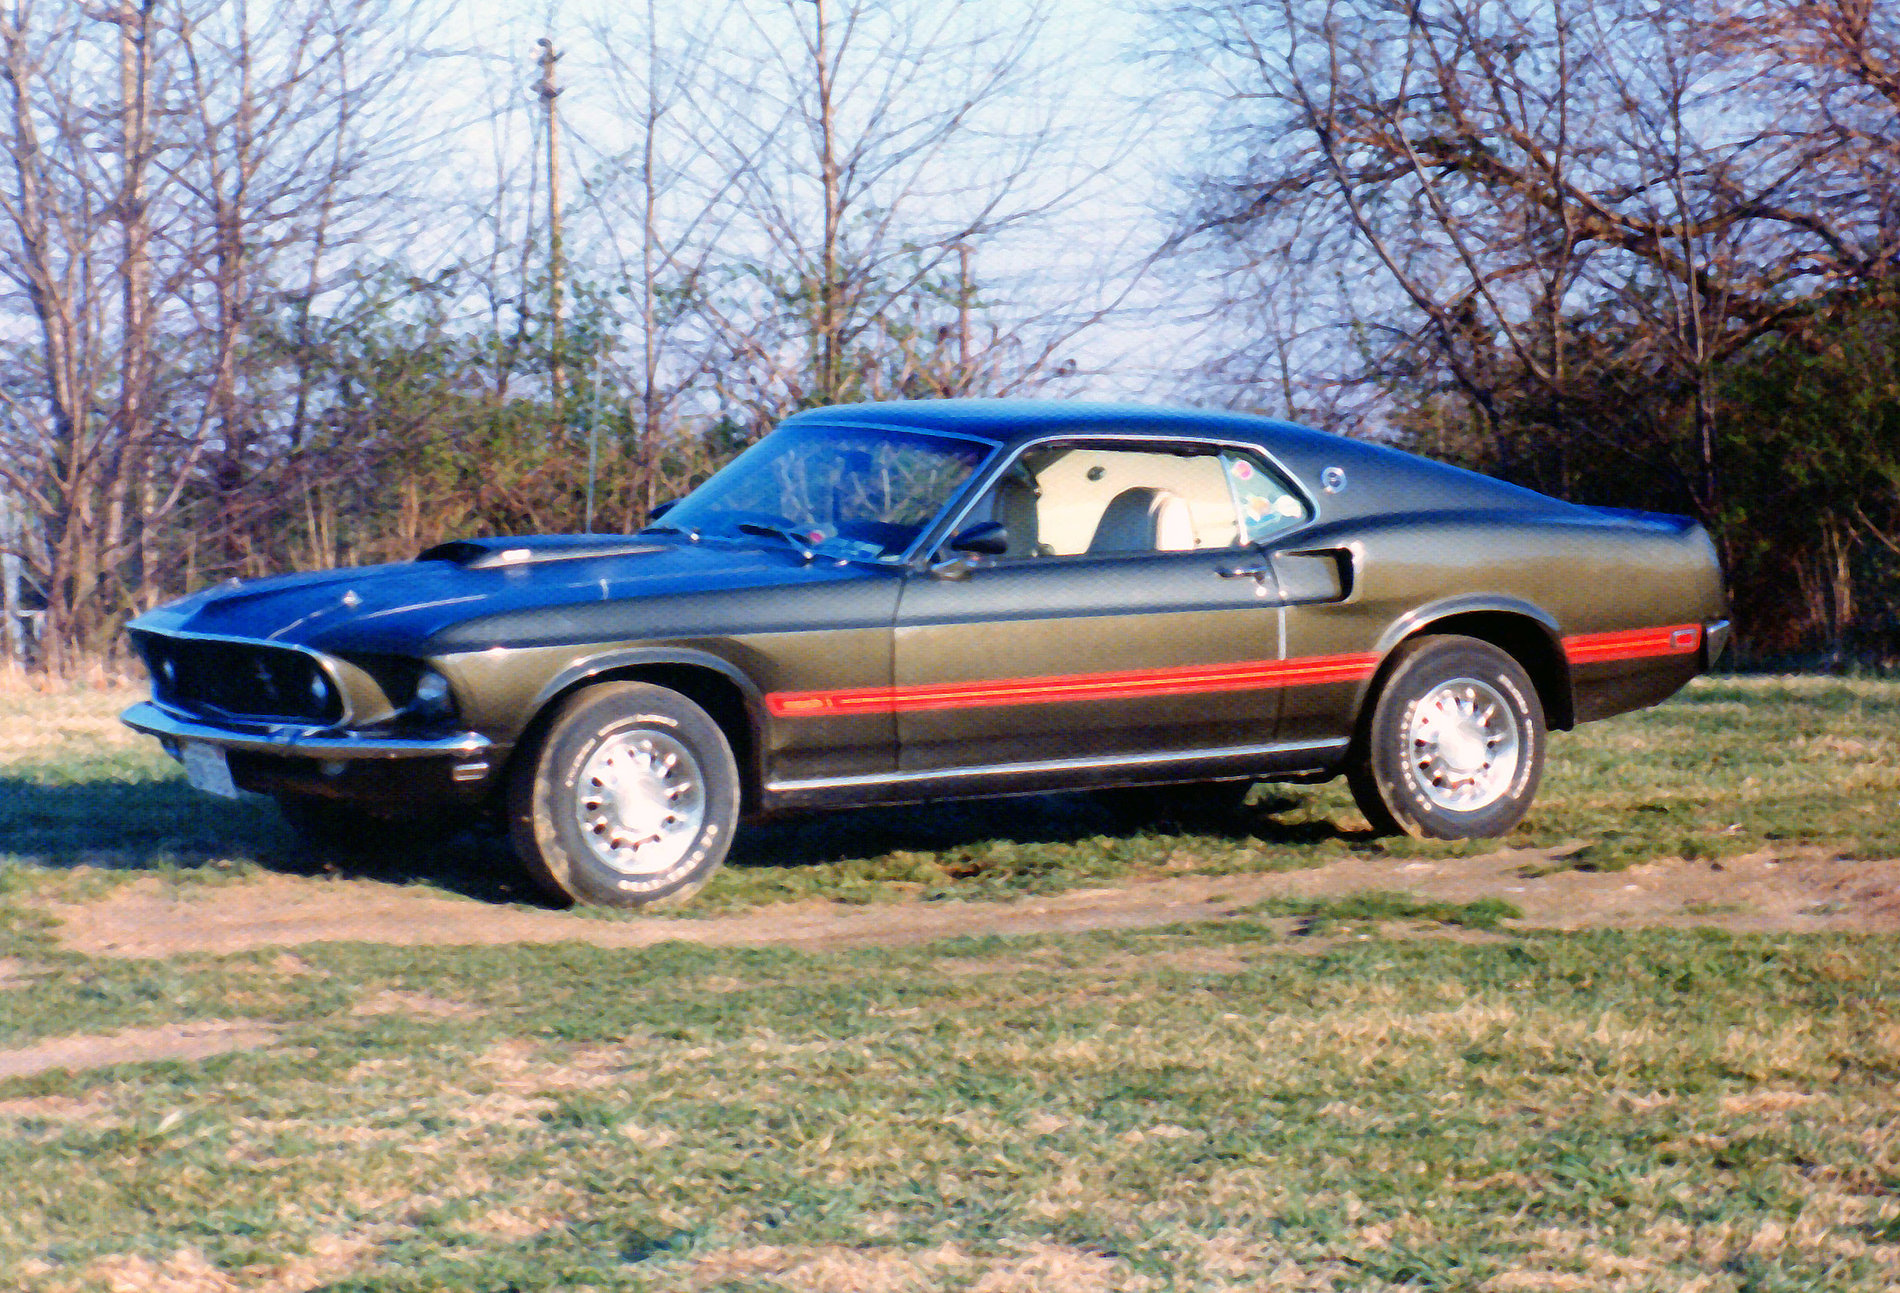 1969 Mustang Mach 1 Black Jade crop-retouch v1.jpg